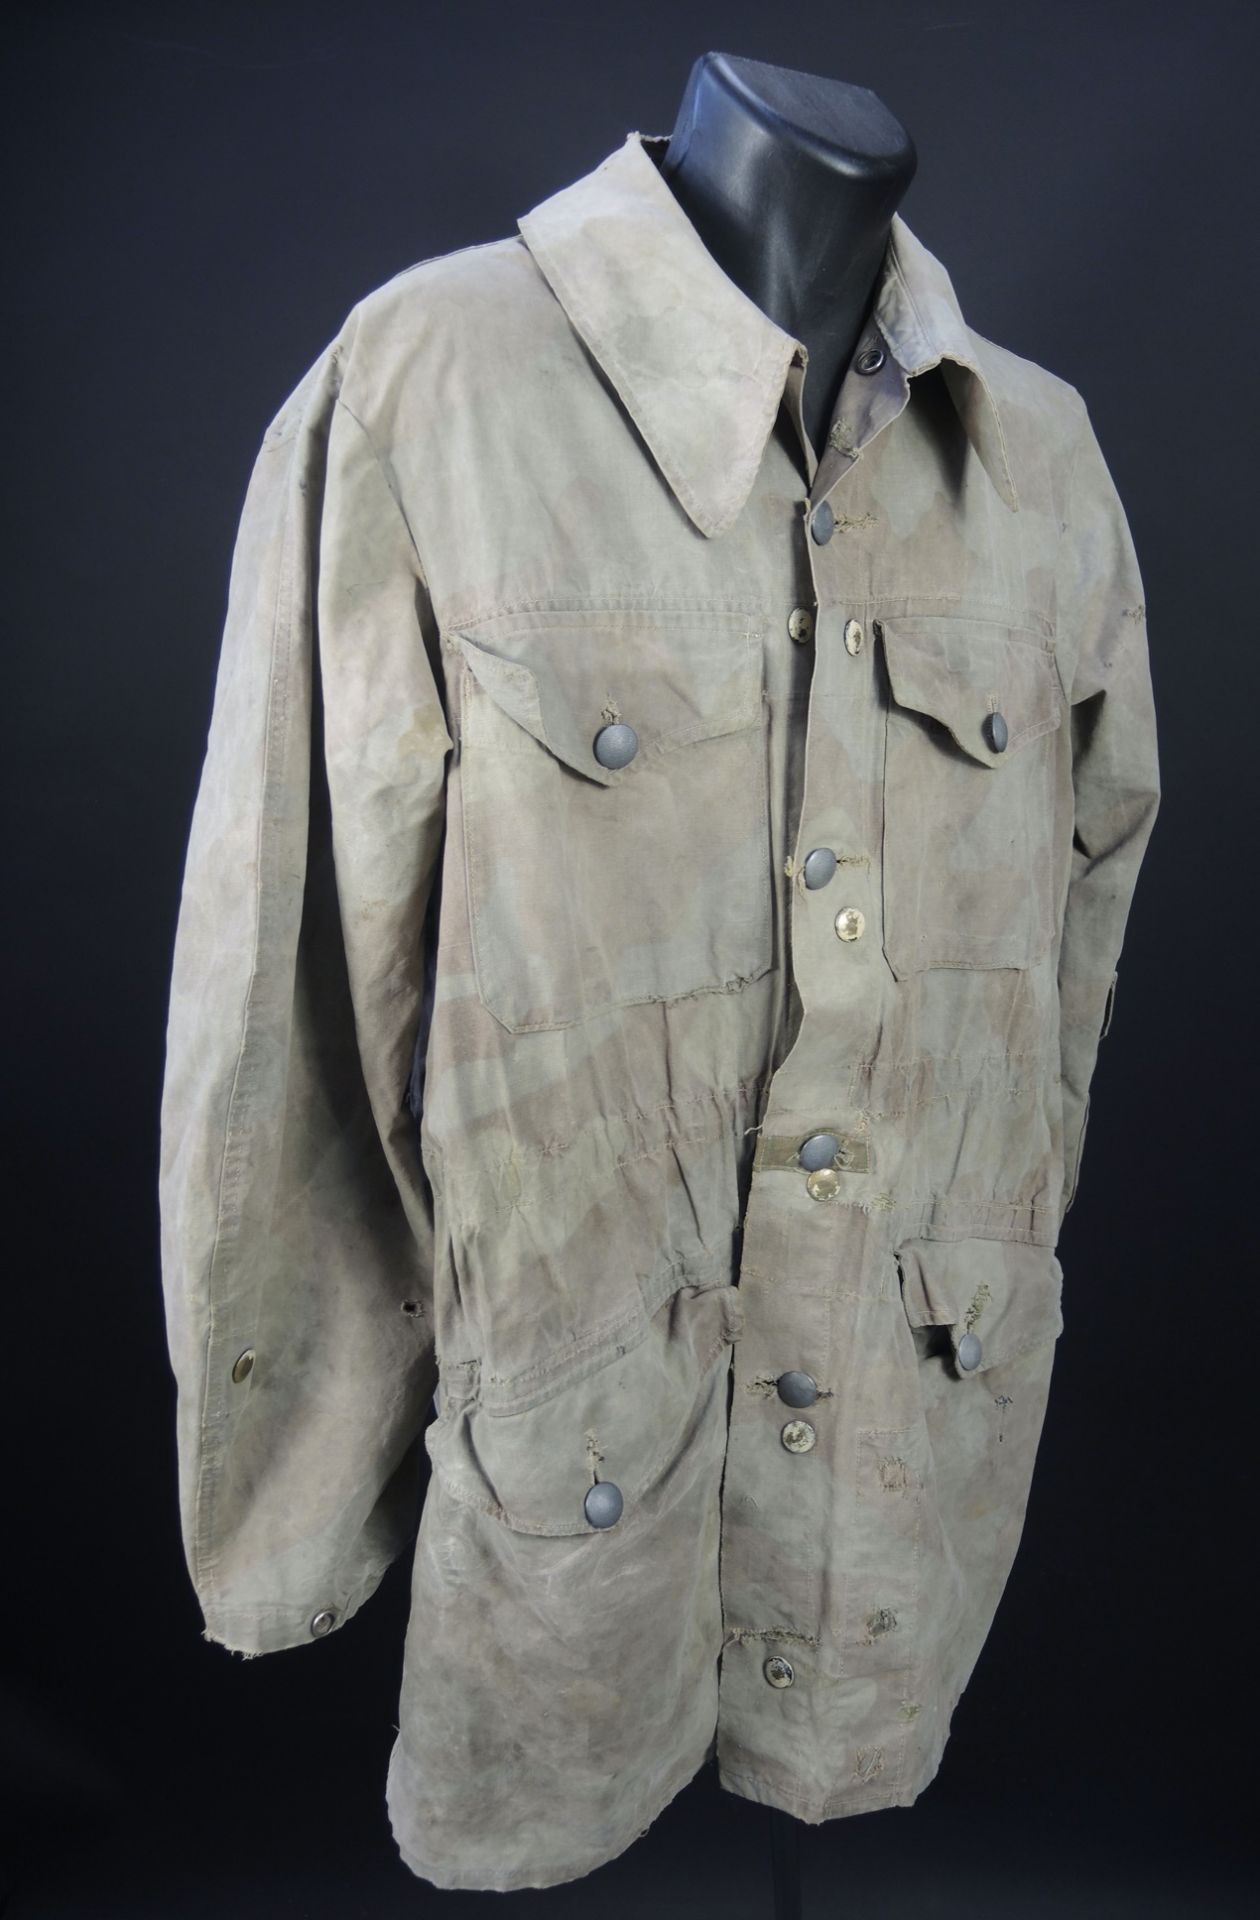 Blouson SS camoufle. Camouflaged SS jacket. - Bild 2 aus 5